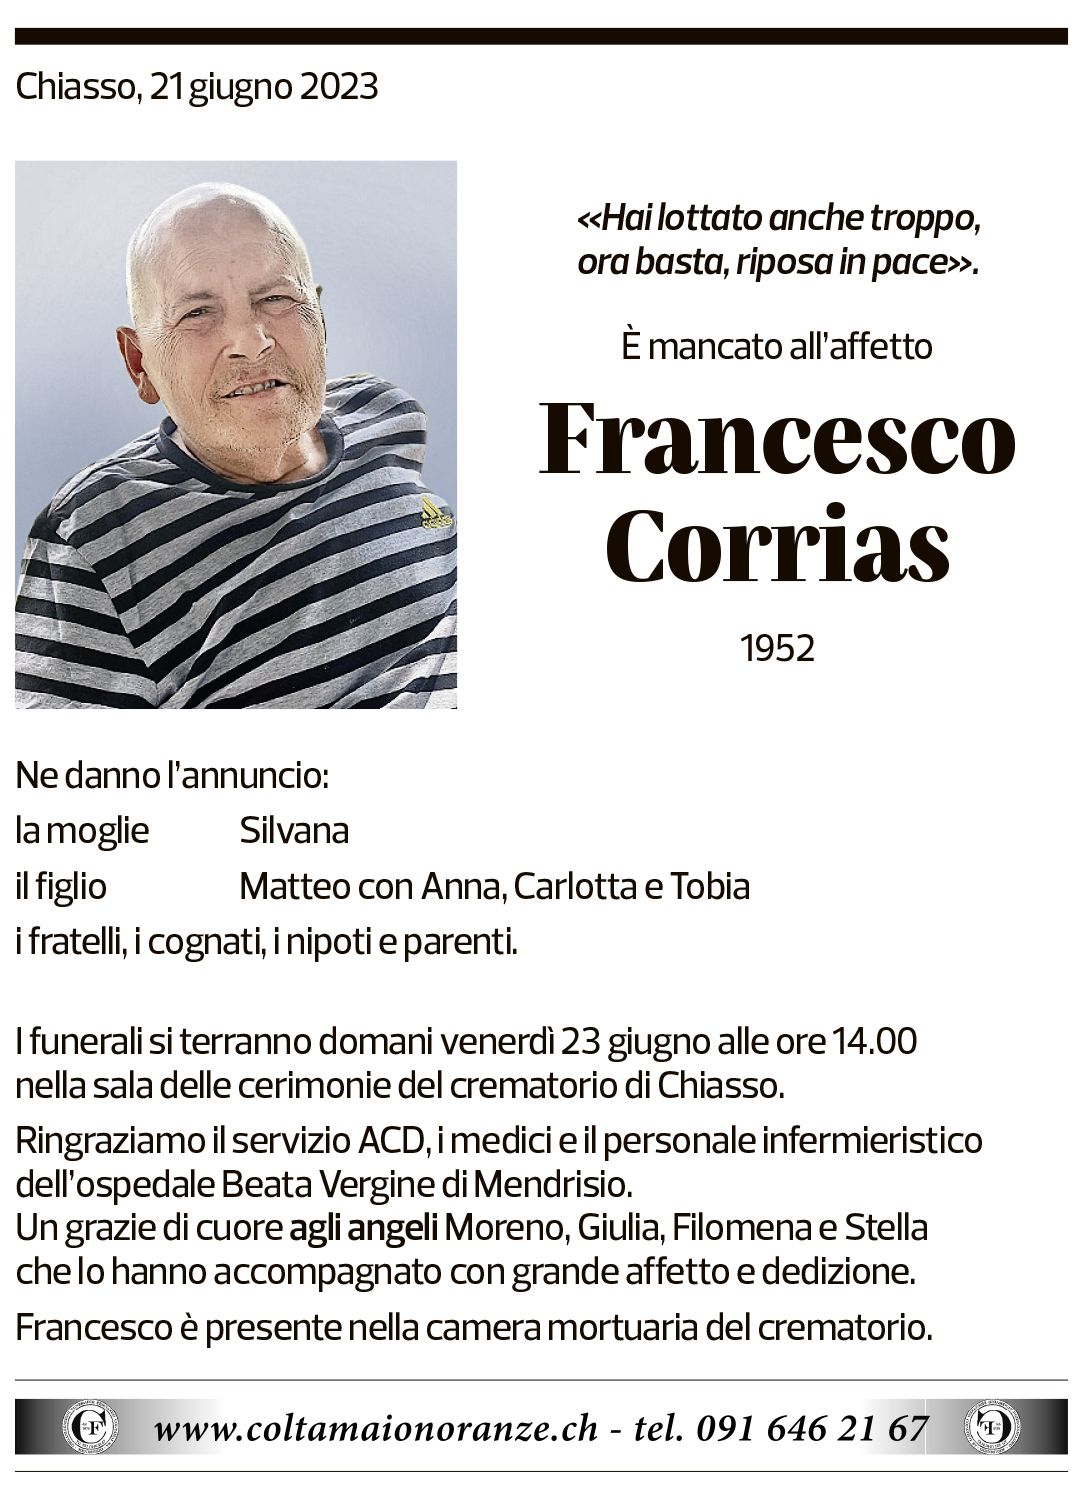 Annuncio funebre Francesco Corrias